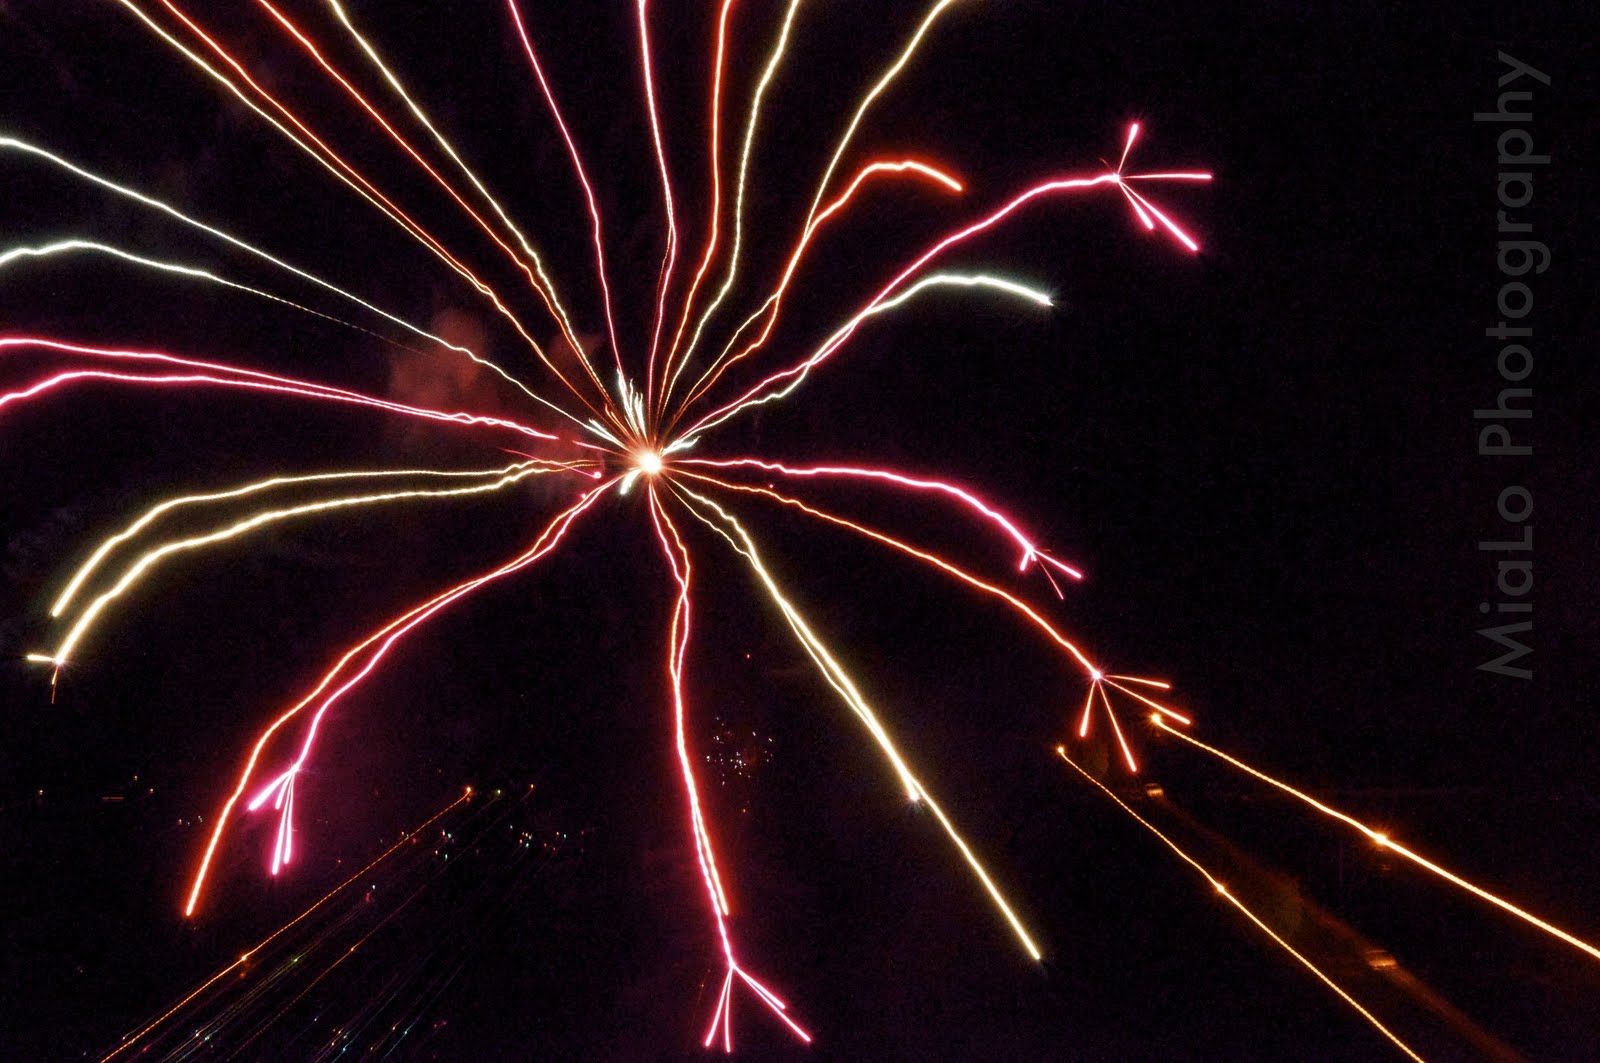 Canada+day+2011+fireworks+calgary